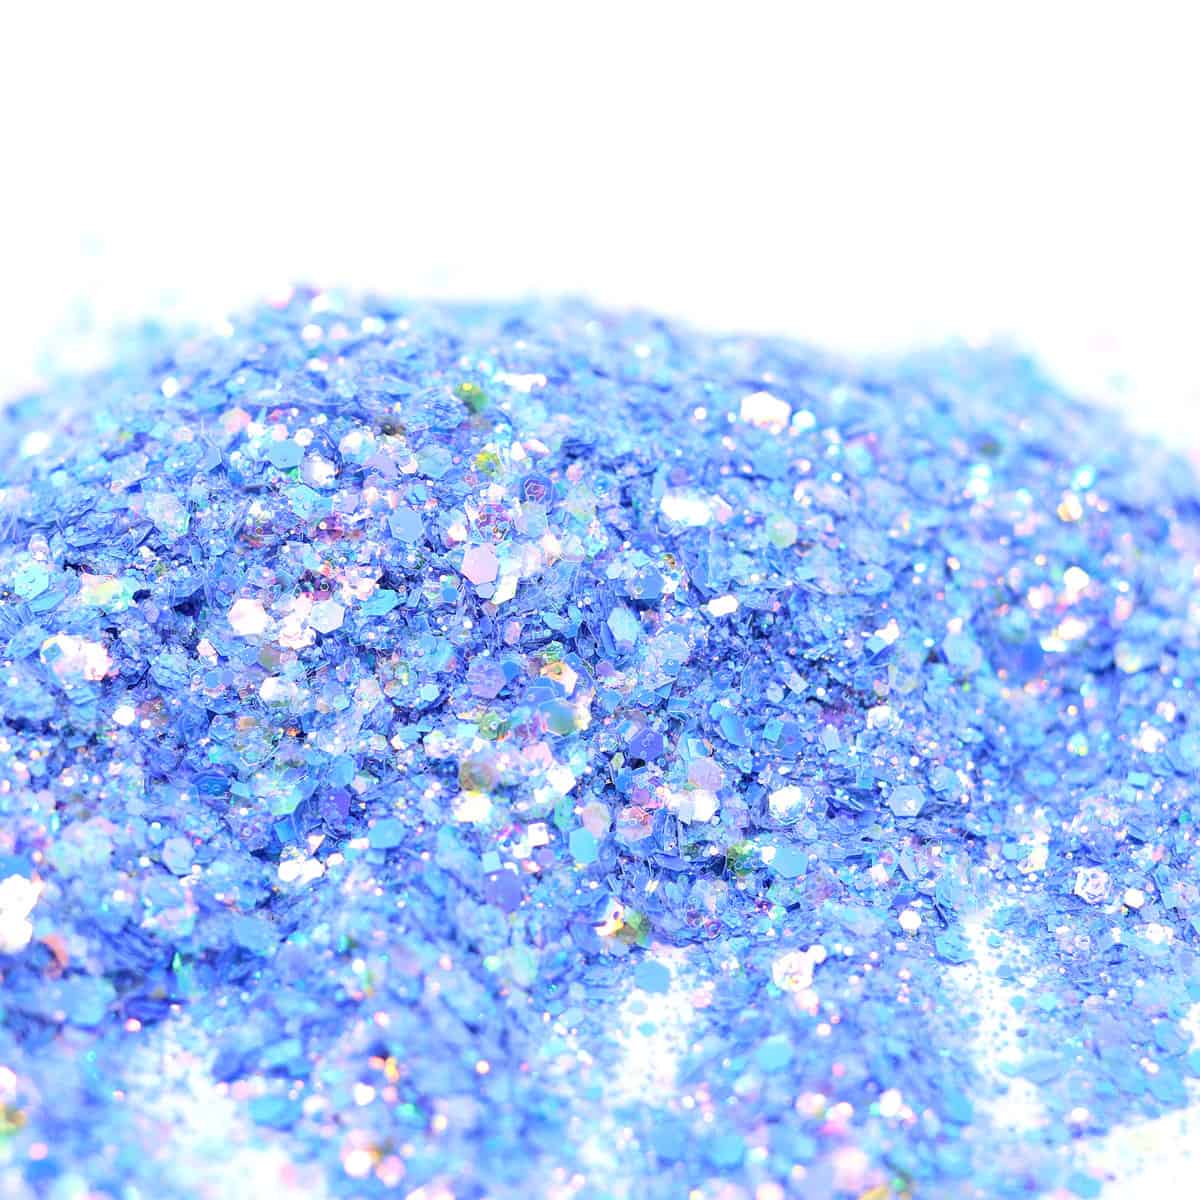 Flaky blue glitter